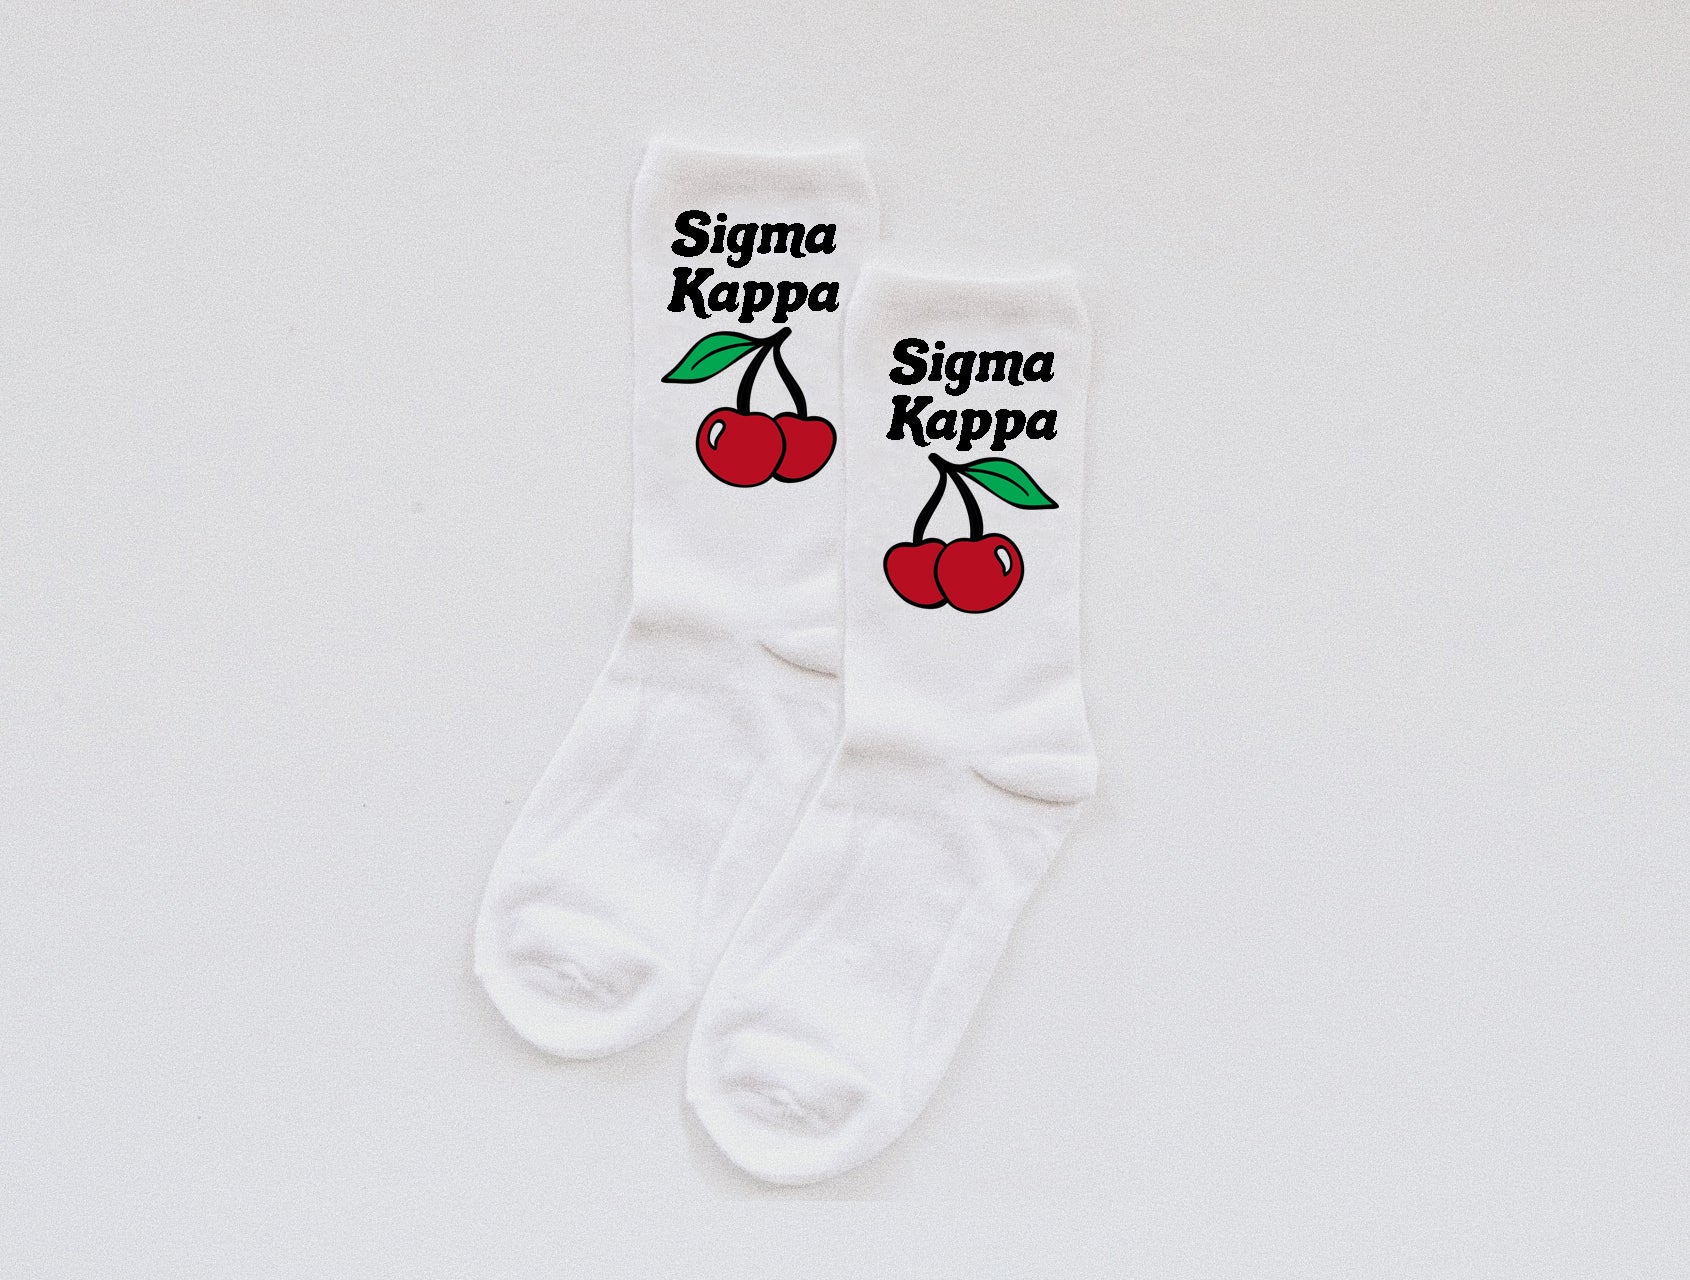 cherry Sorority socks - custom text! - Spikes and Seams Greek